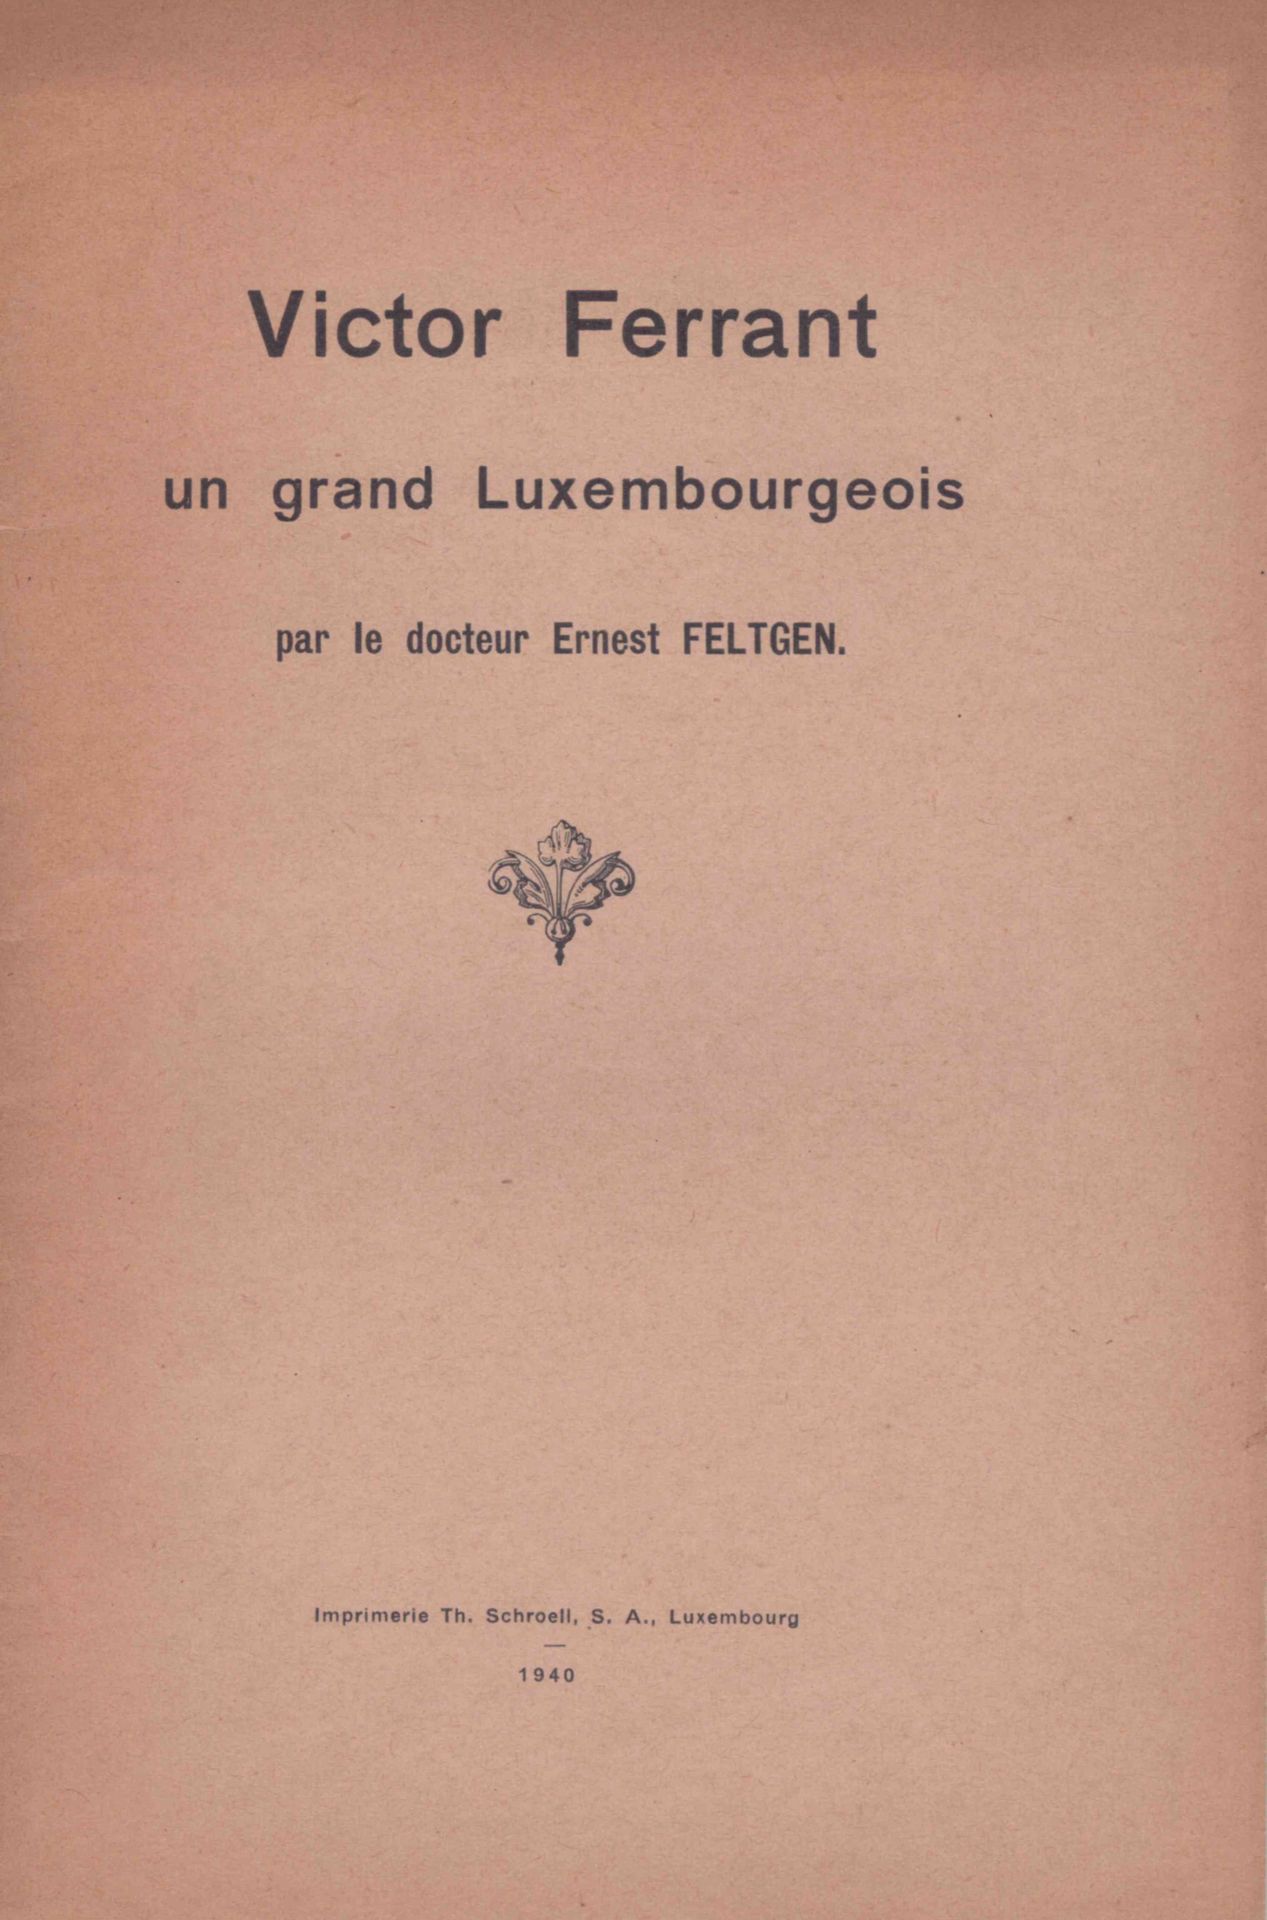 Null (Homenaje) Dr. Ernest FELTGEN: Victor Ferrant, un grand luxembourgeois, Imp&hellip;